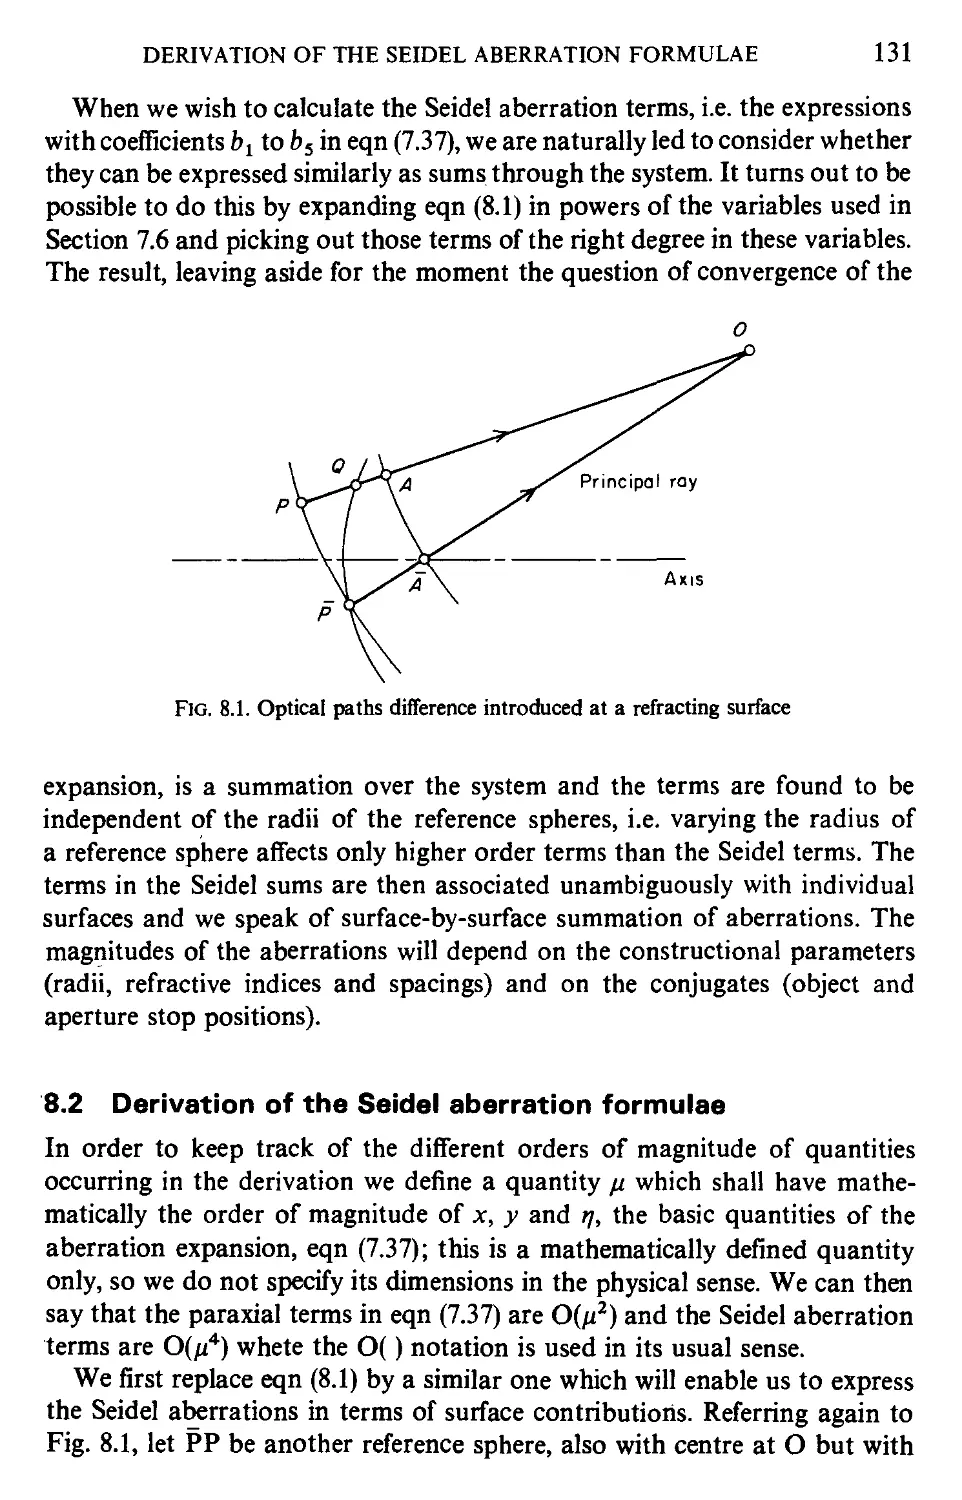 8.2 Derivation of the Seidel aberration formulae